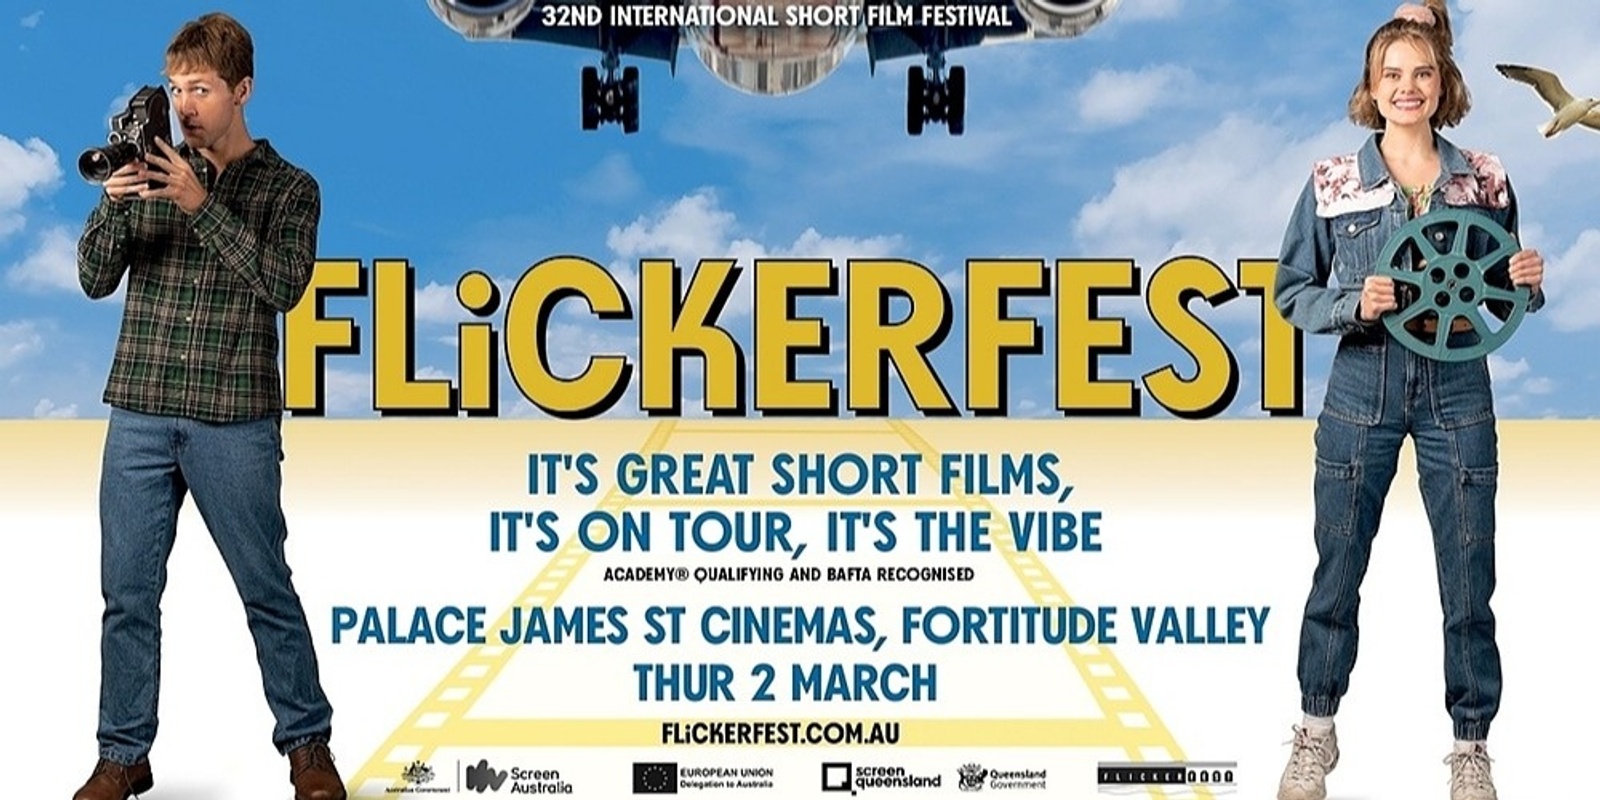 Banner image for Brisbane Flickerfest 2023 Short Film Festival Tour